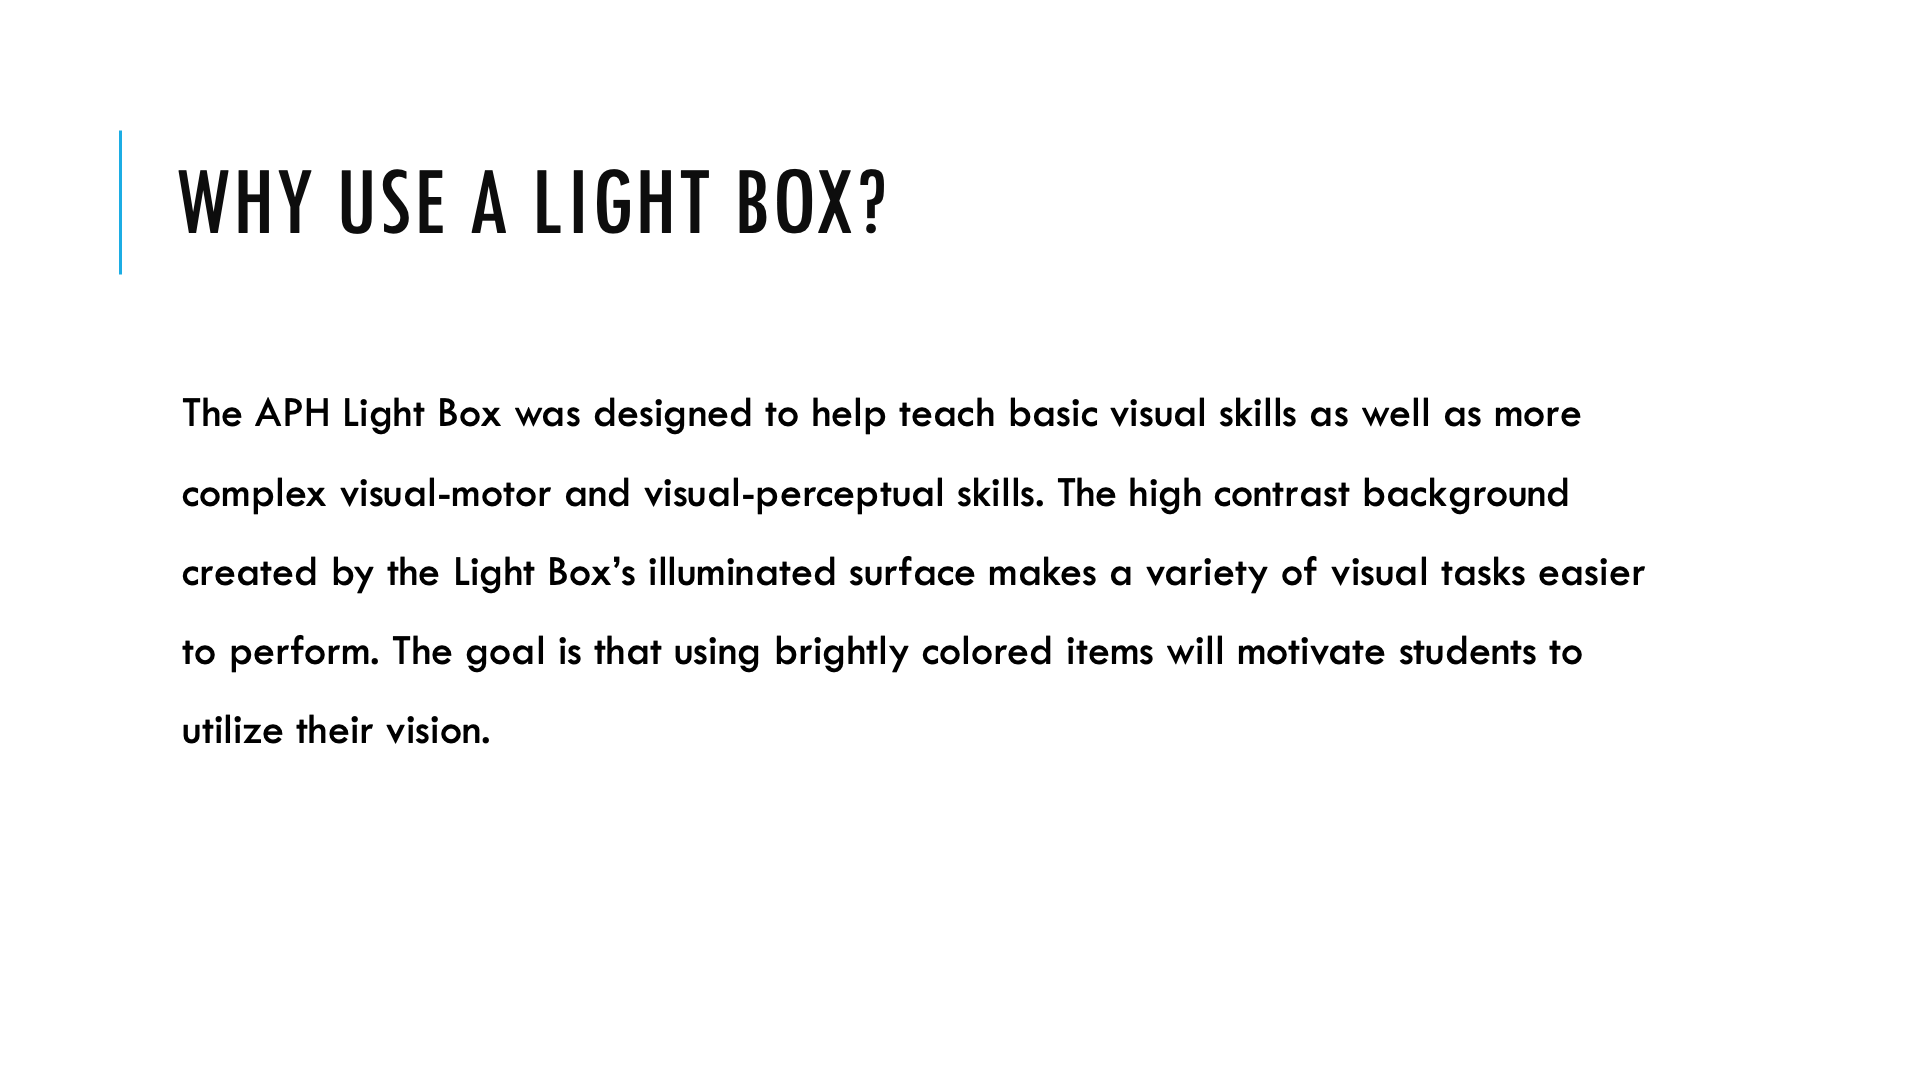 Why Use a Light Box?